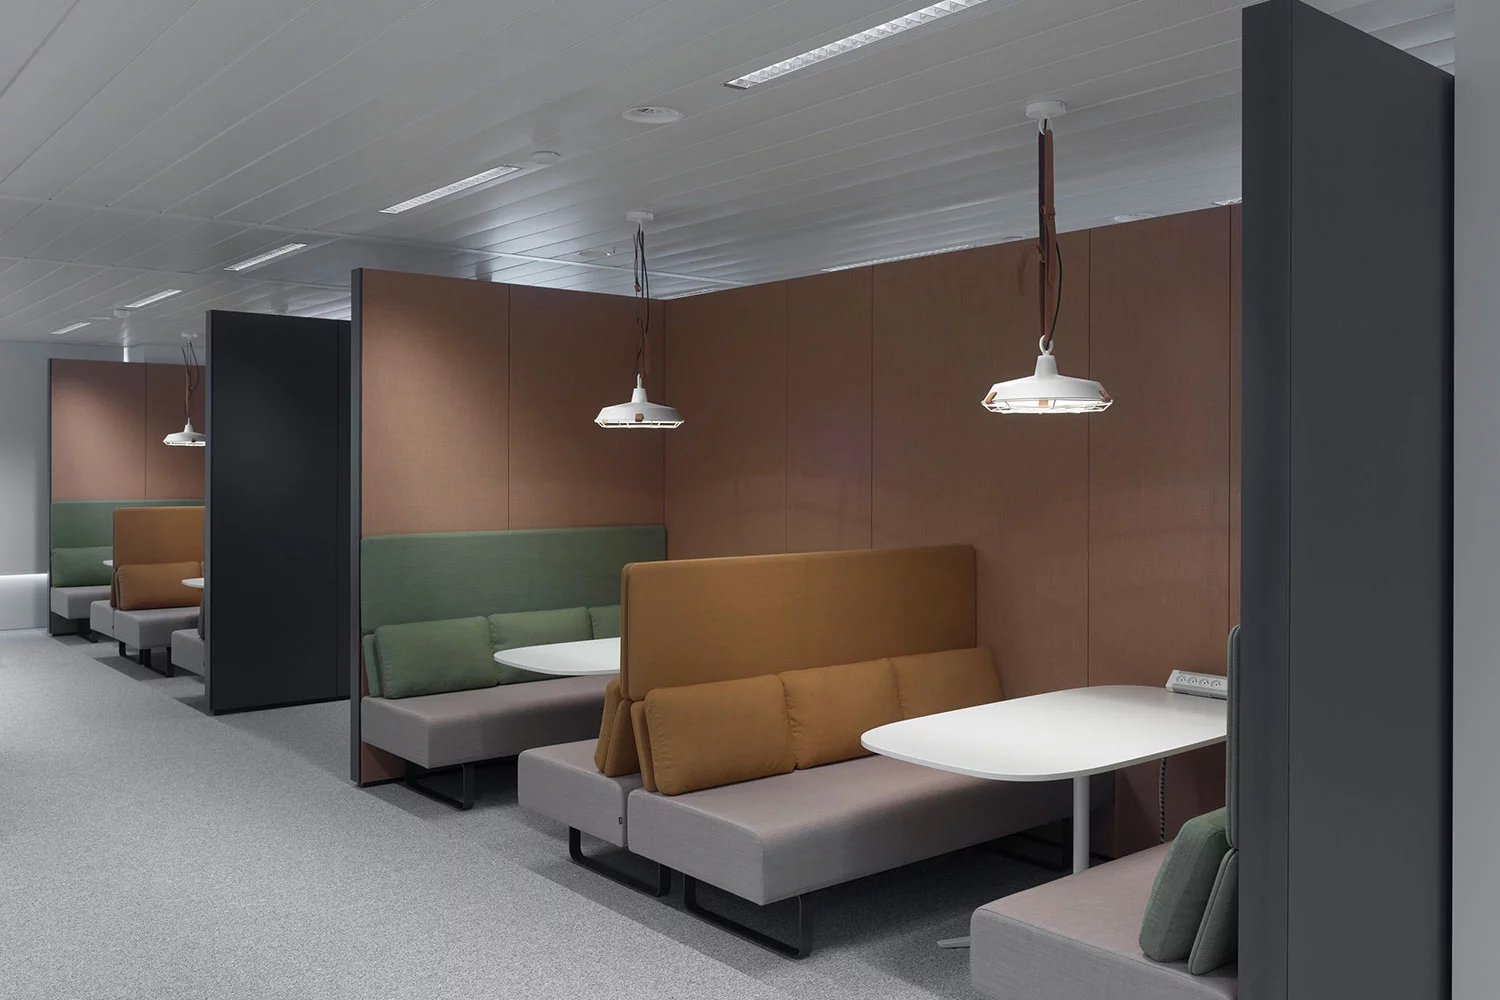 nooxs, Spatial organisation, Bene Office furniture, Image 7